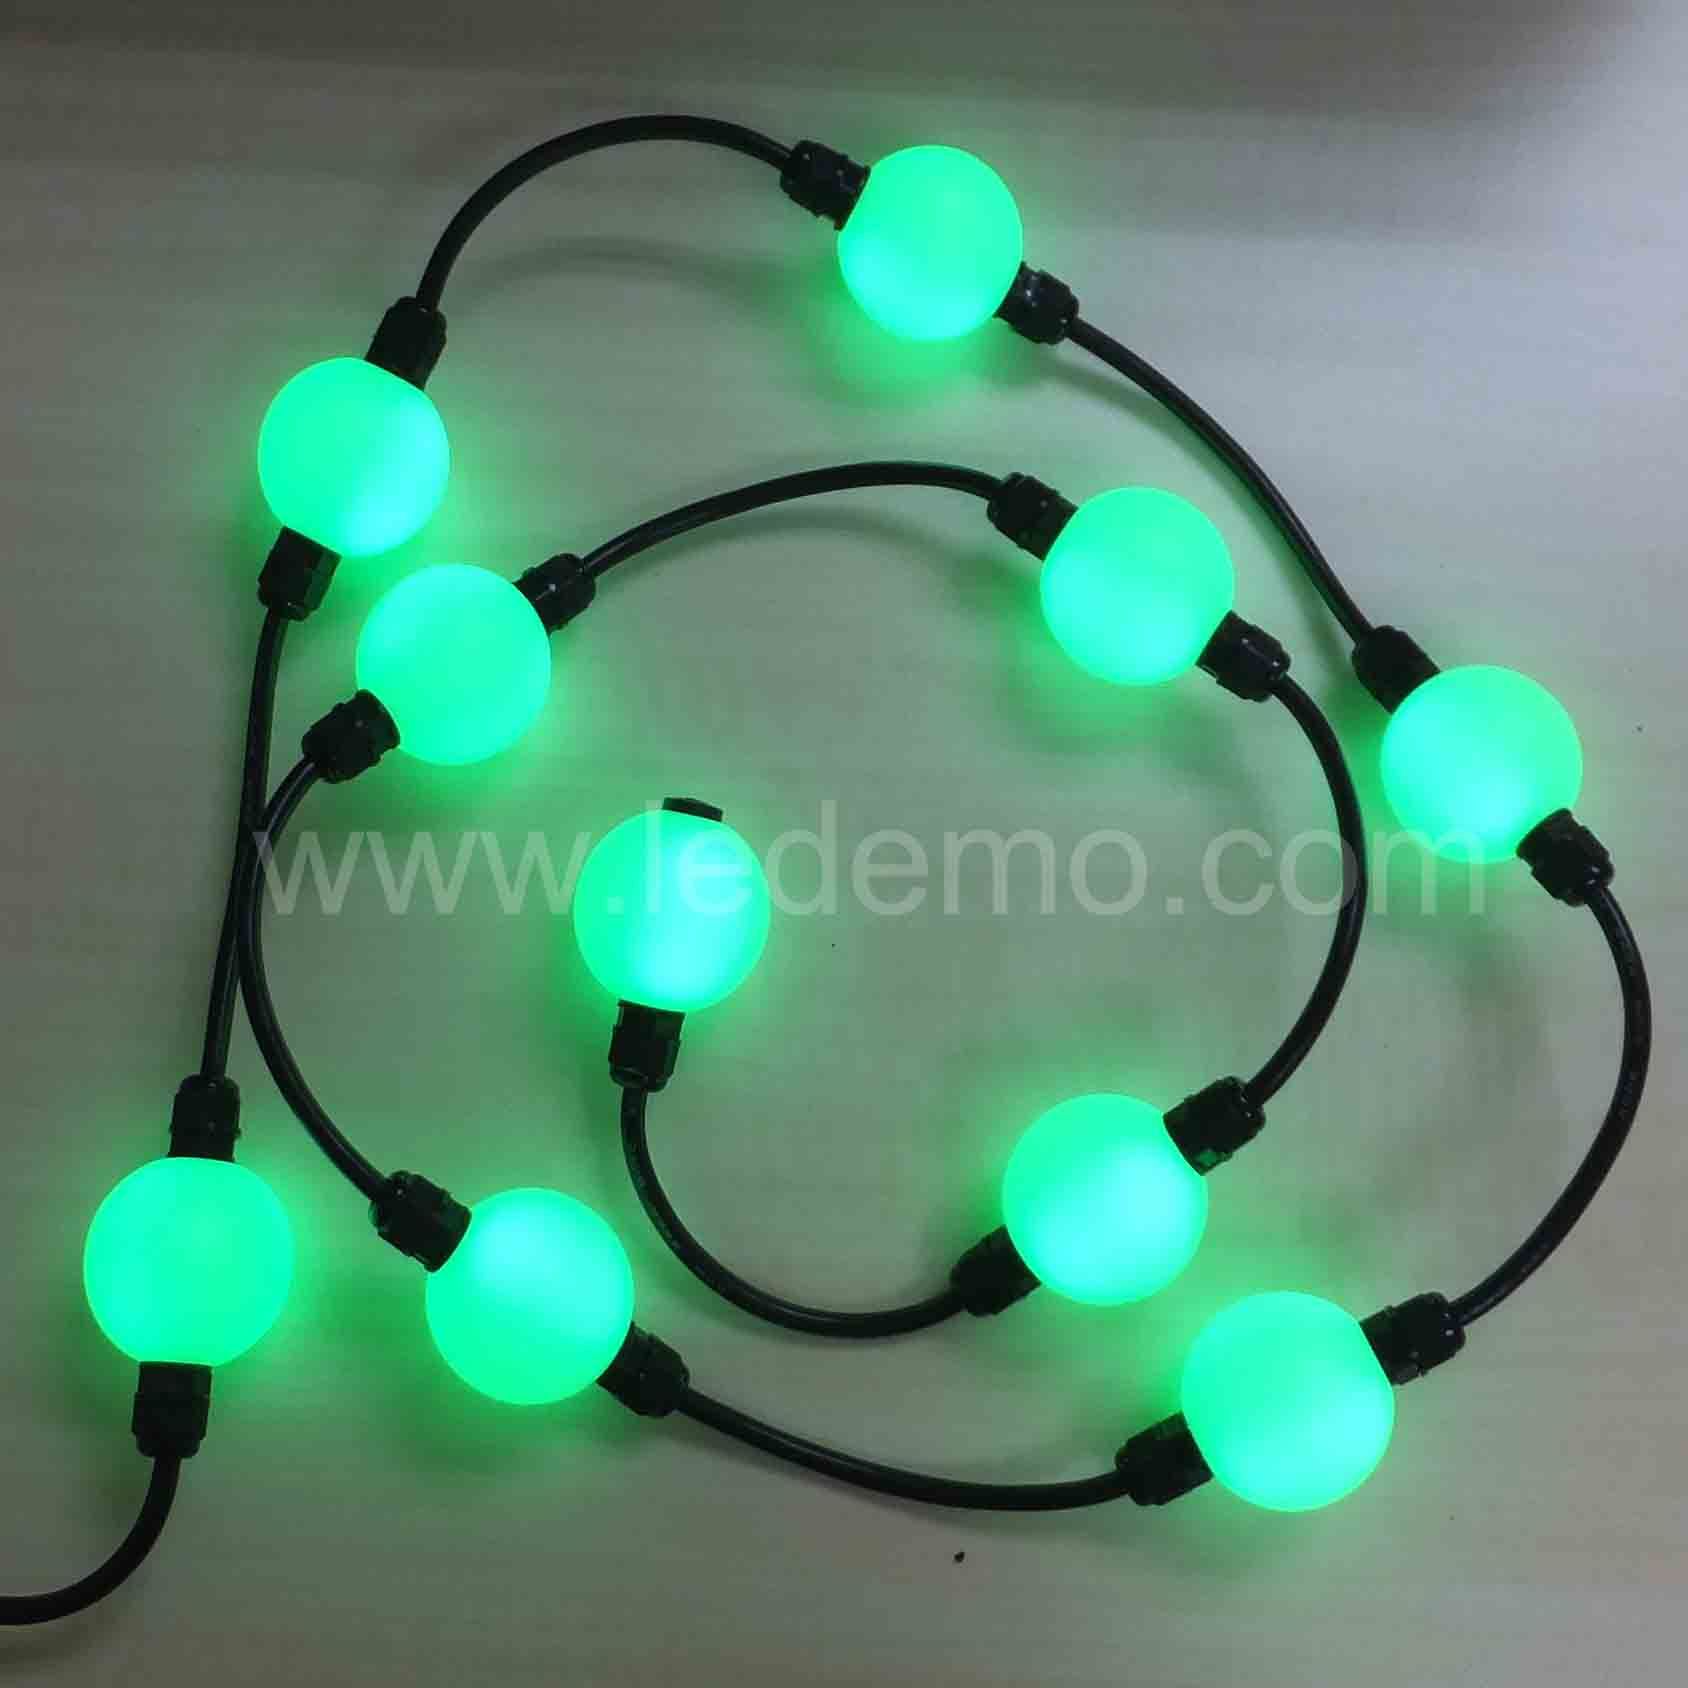 Professional Ornament LED Garden Ball Light